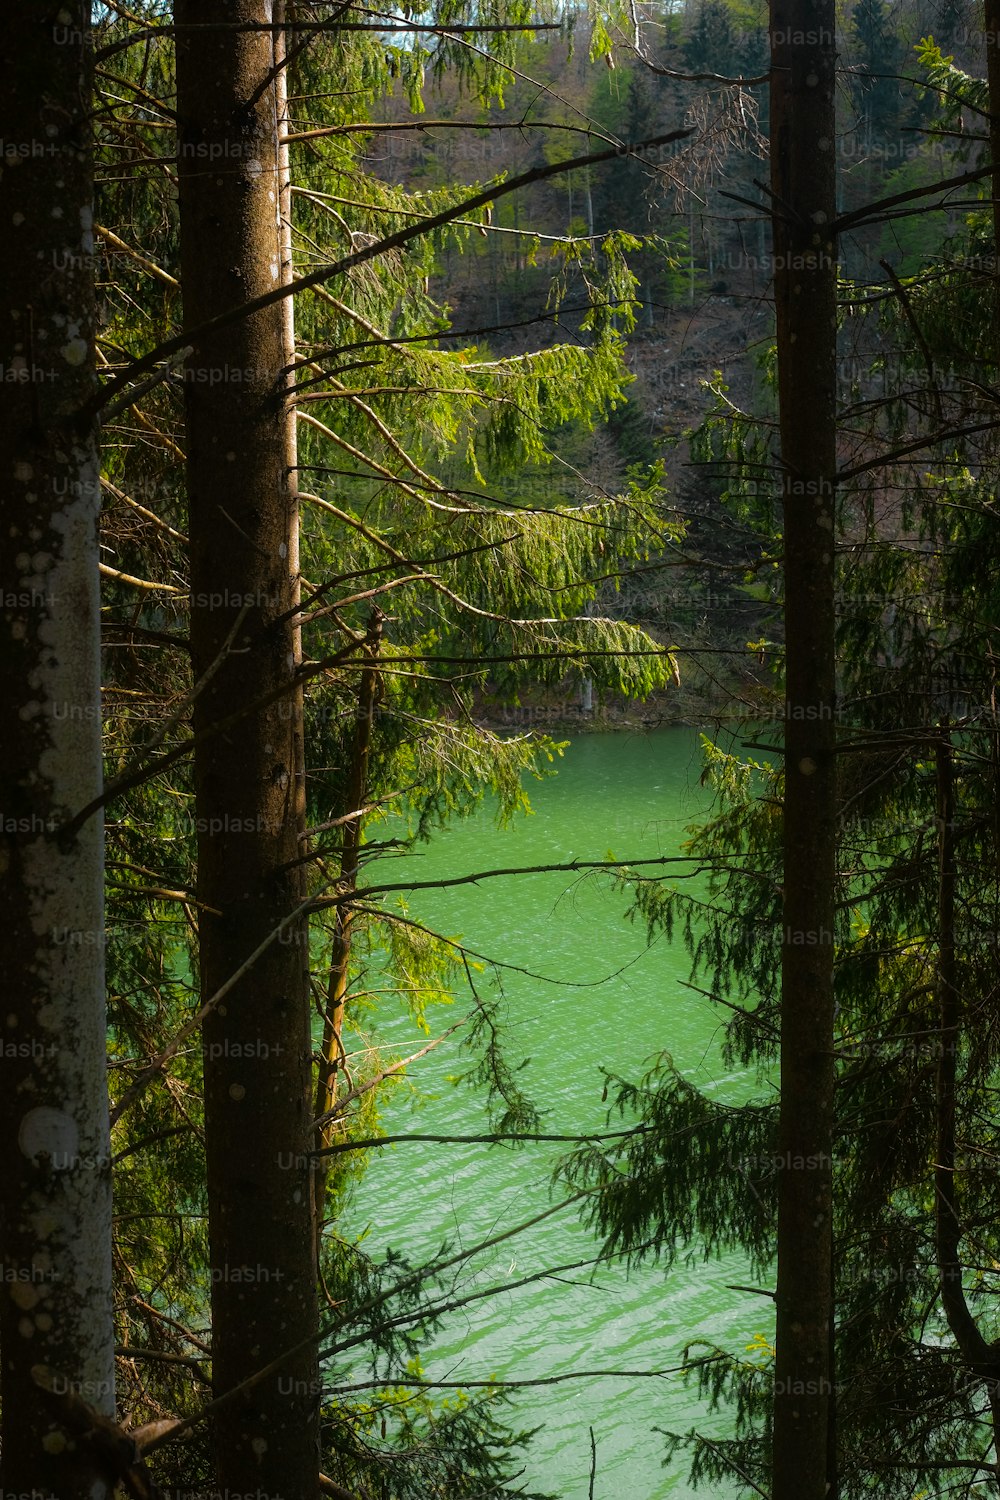 un cuerpo de agua rodeado de árboles en un bosque